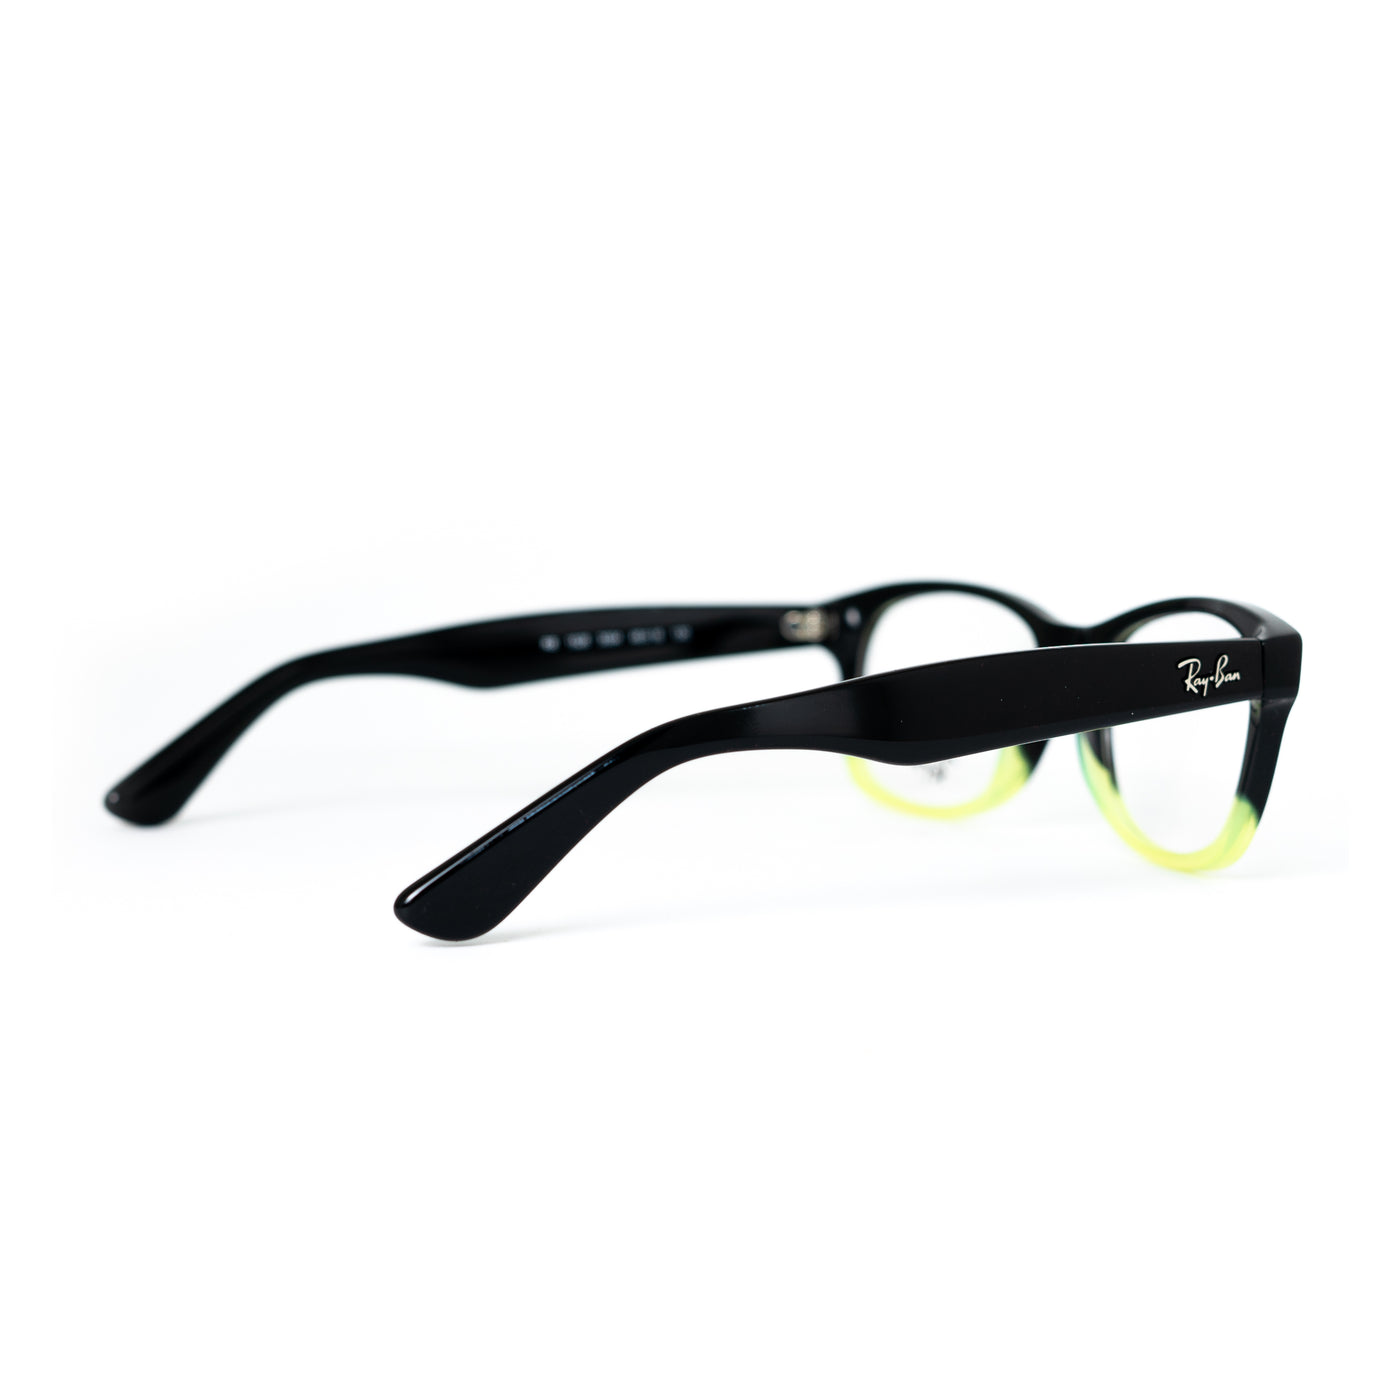 Ray-Ban Junior (Kids) RY1528/3594_48 | Eyeglasses - Vision Express Optical Philippines